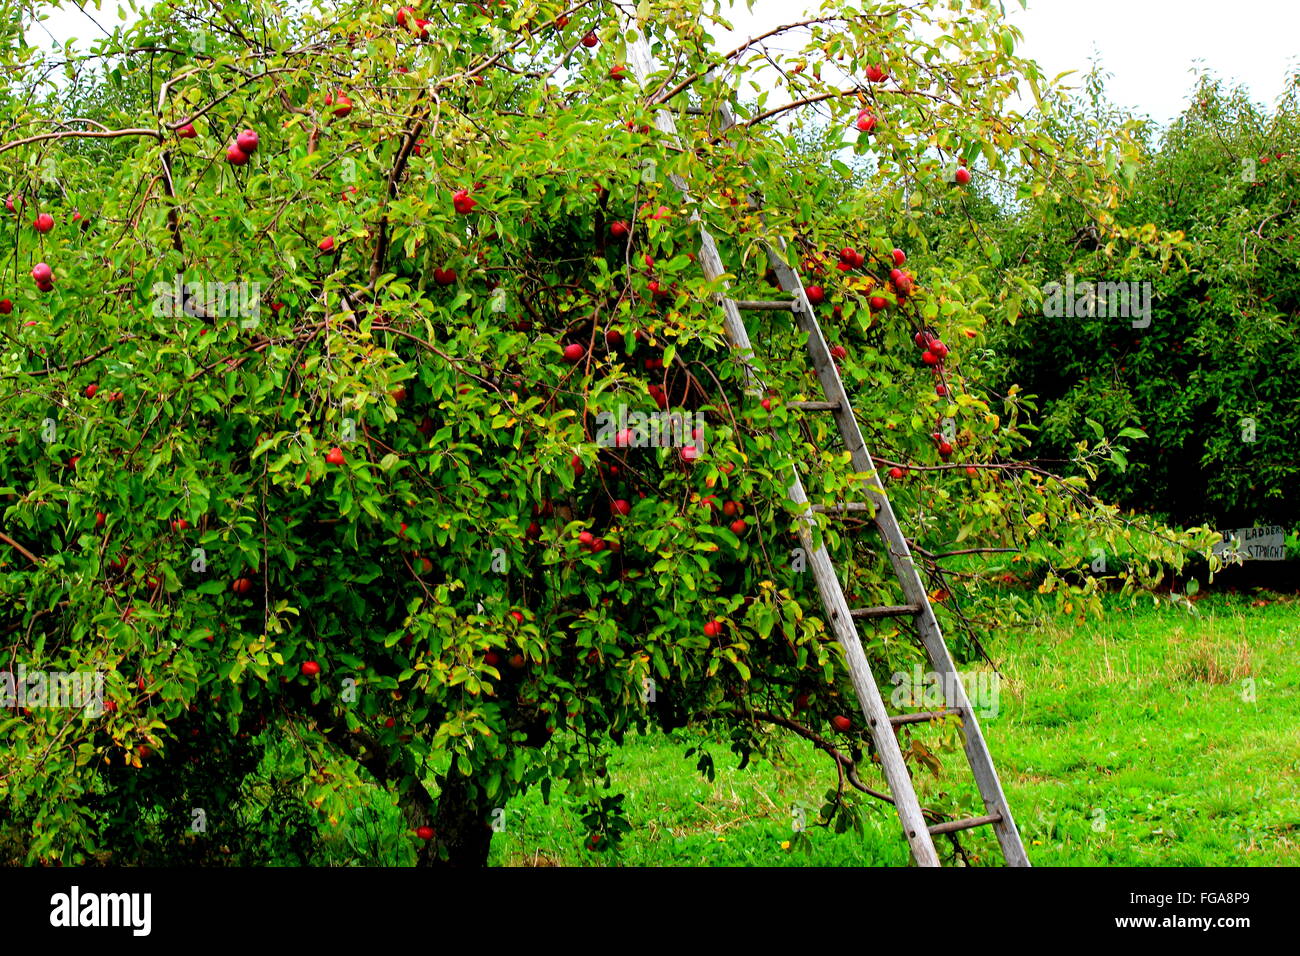 Leiter auf Apfelbaum im Feld Stockfotografie - Alamy